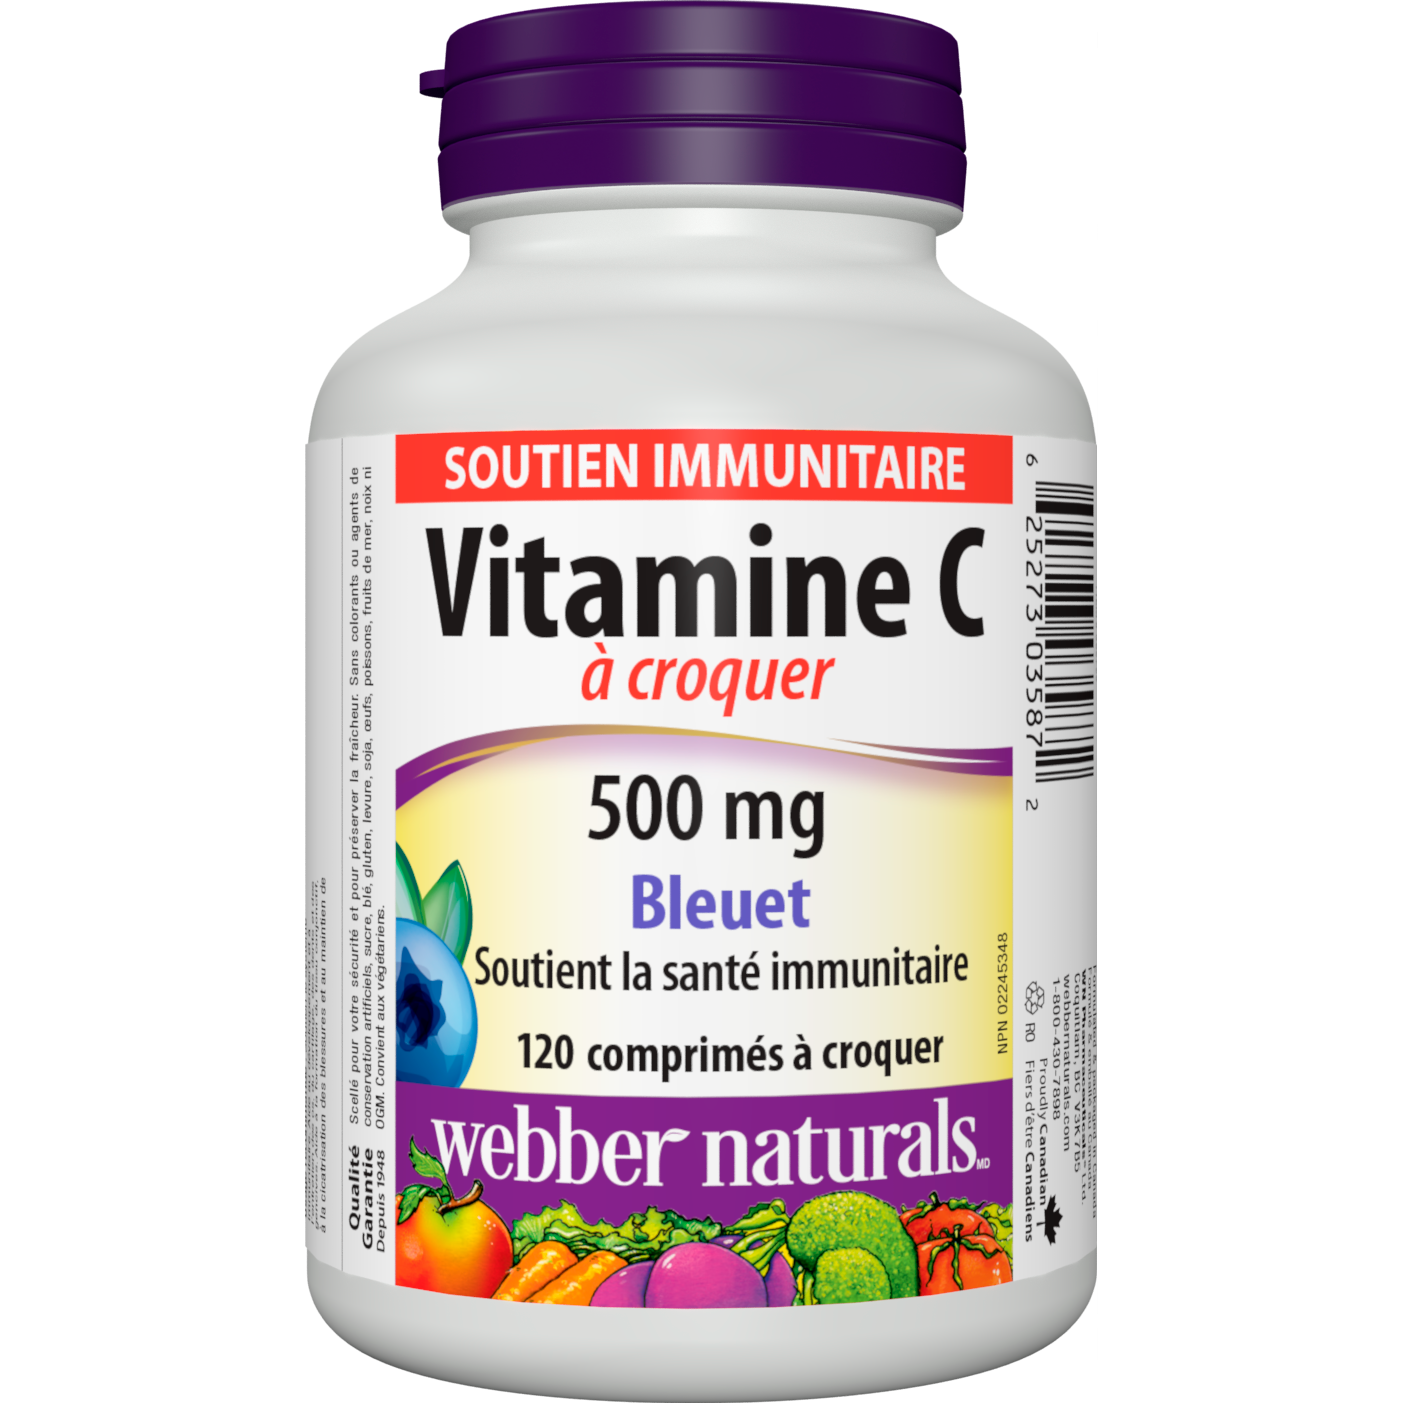 Vitamine C à croquer bleuet for Webber Naturals|v|hi-res|WN3587